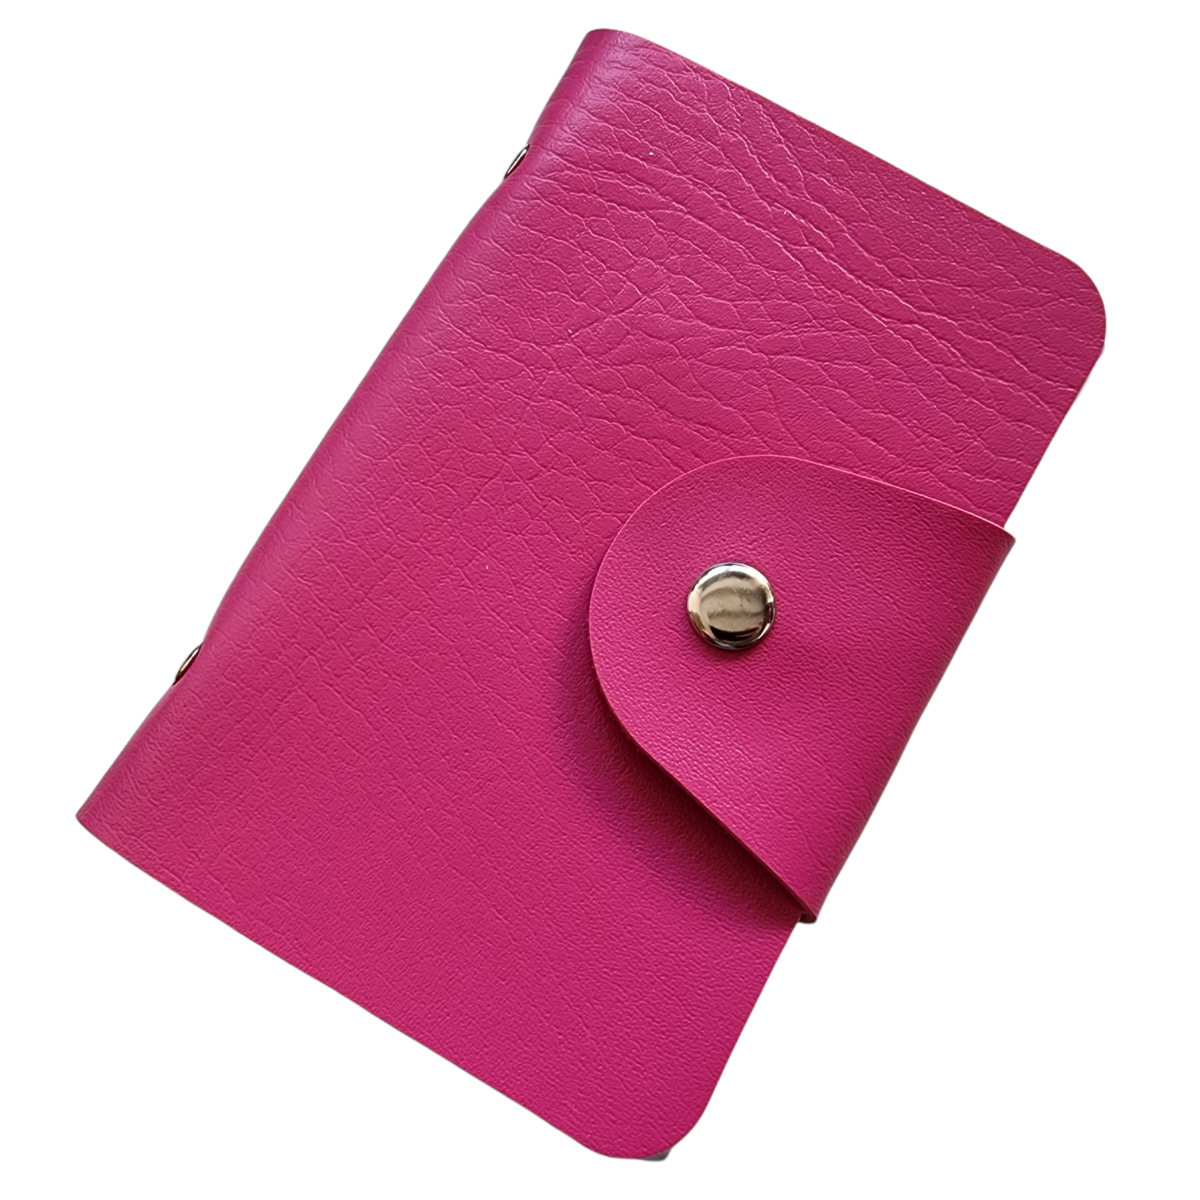 Suport portofel pentru matrite Pink 9.5x14.5